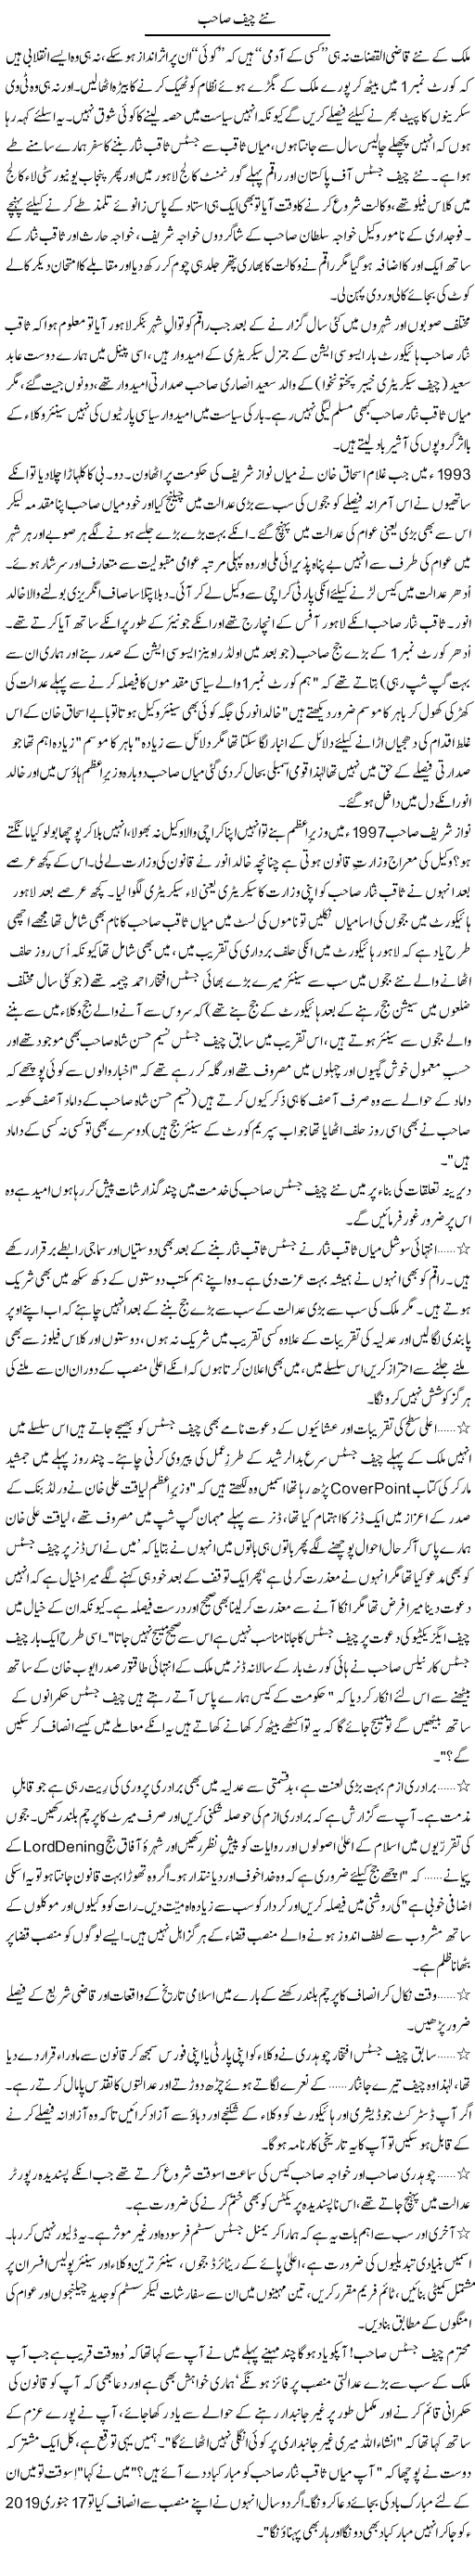 Nae Chief Sahib | Zulfiqar Ahmed Cheema | Daily Urdu Columns